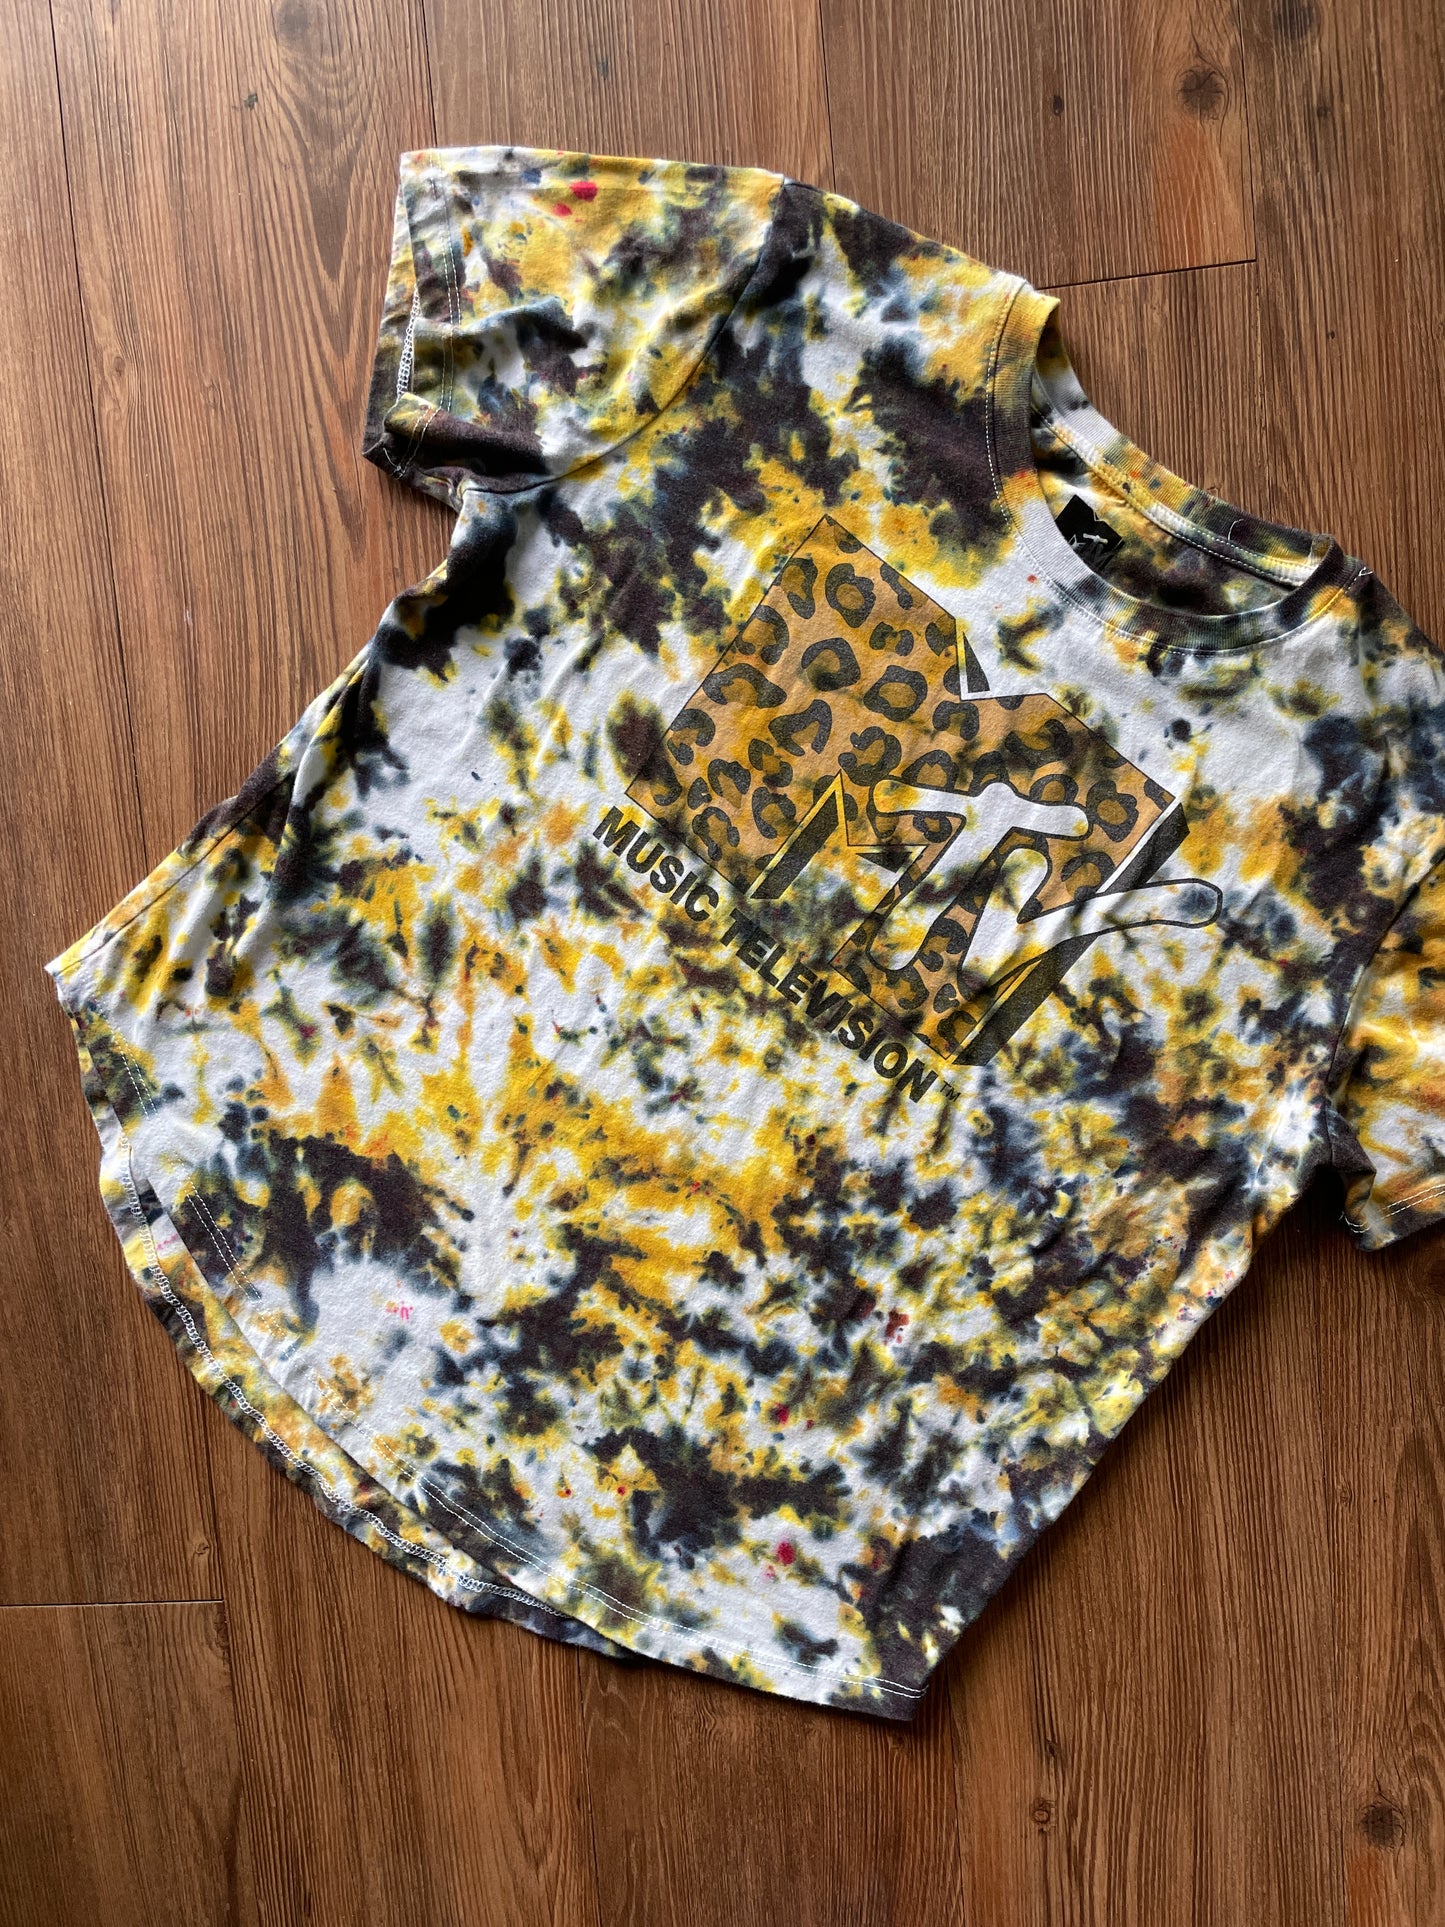 XL Women’s MTV Leopard Print Handmade Tie Dye T-Shirt | Music Television Black and Brown Crumpled Tie Dye Short Sleeve